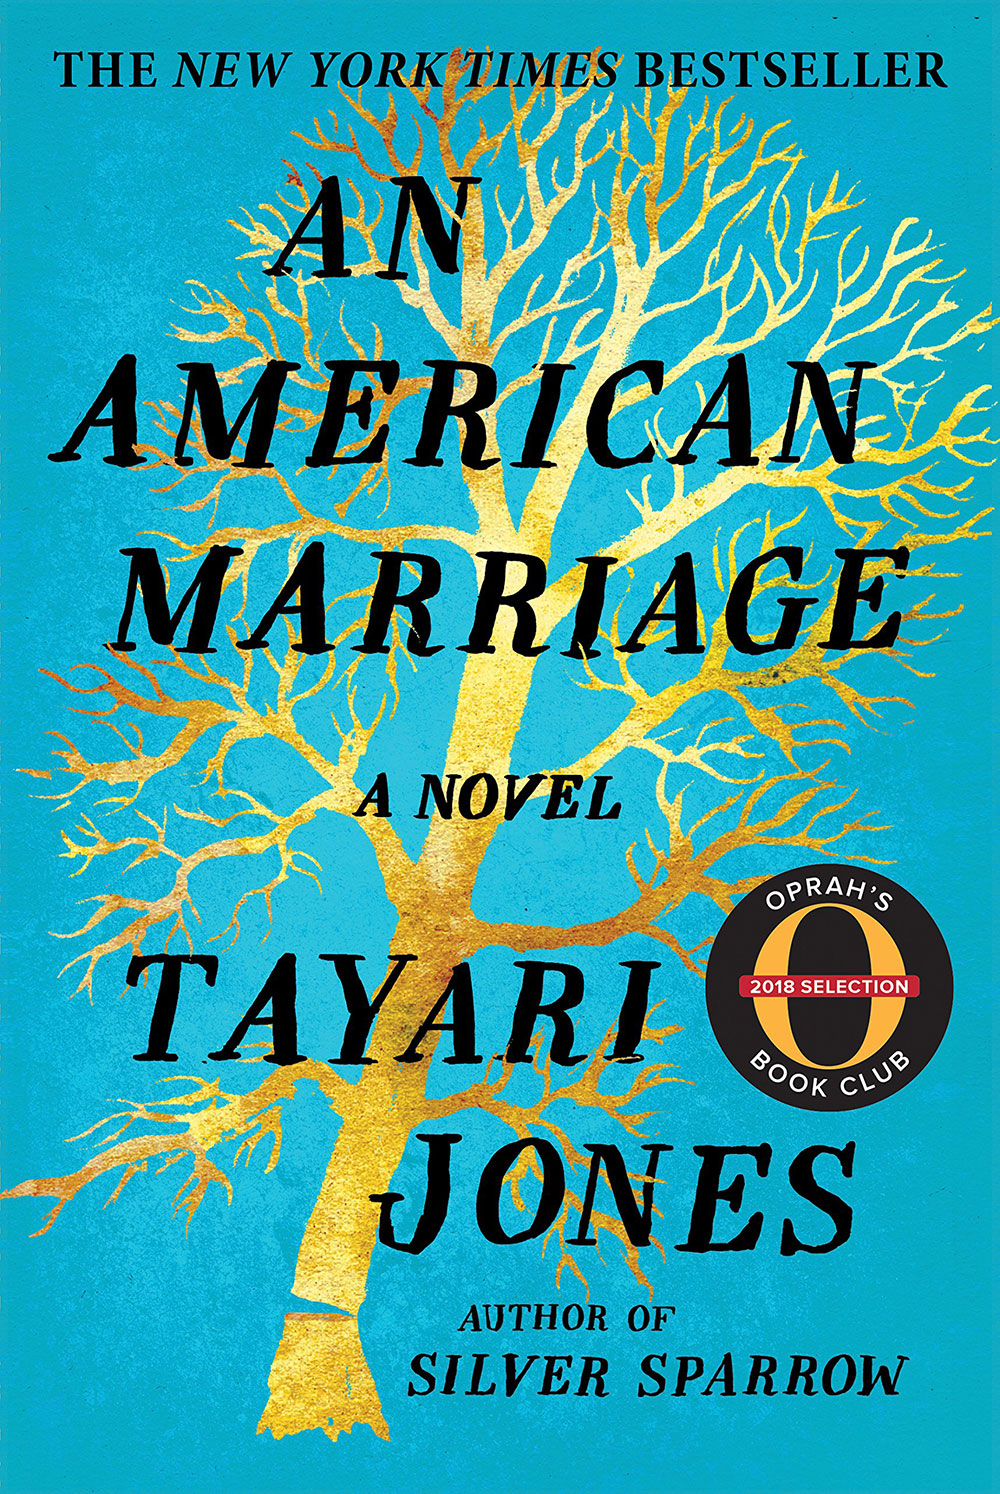 “An American Marriage” by Tayari Jones